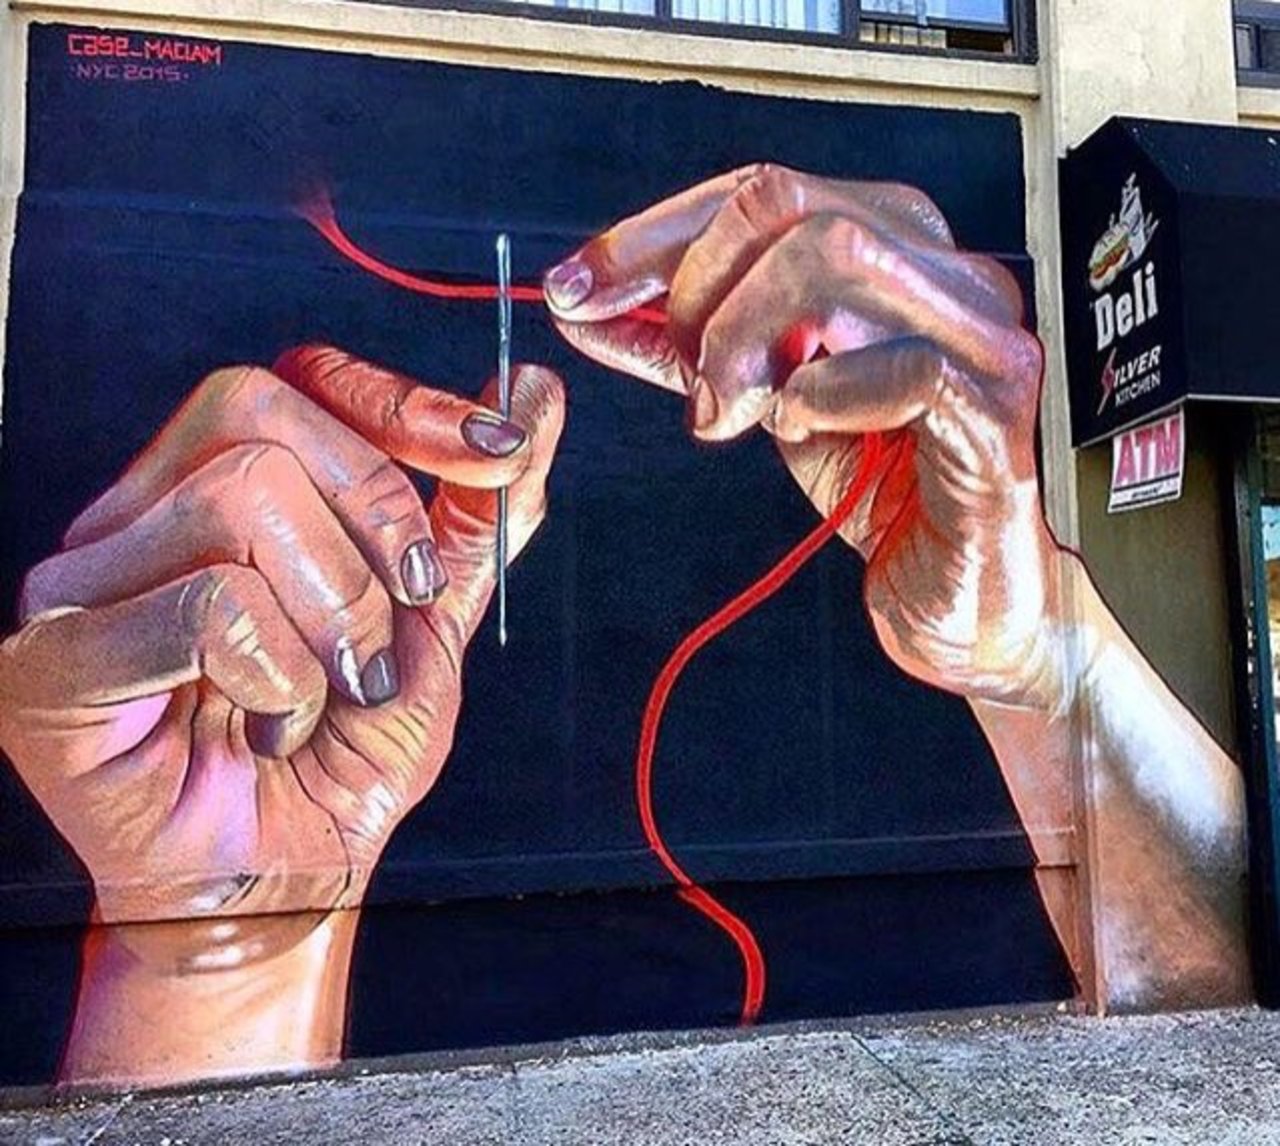 New Street Art by Case Ma'Claim in NYC 

#art #graffiti #mural #streetart https://t.co/xjSZuy7Q5n